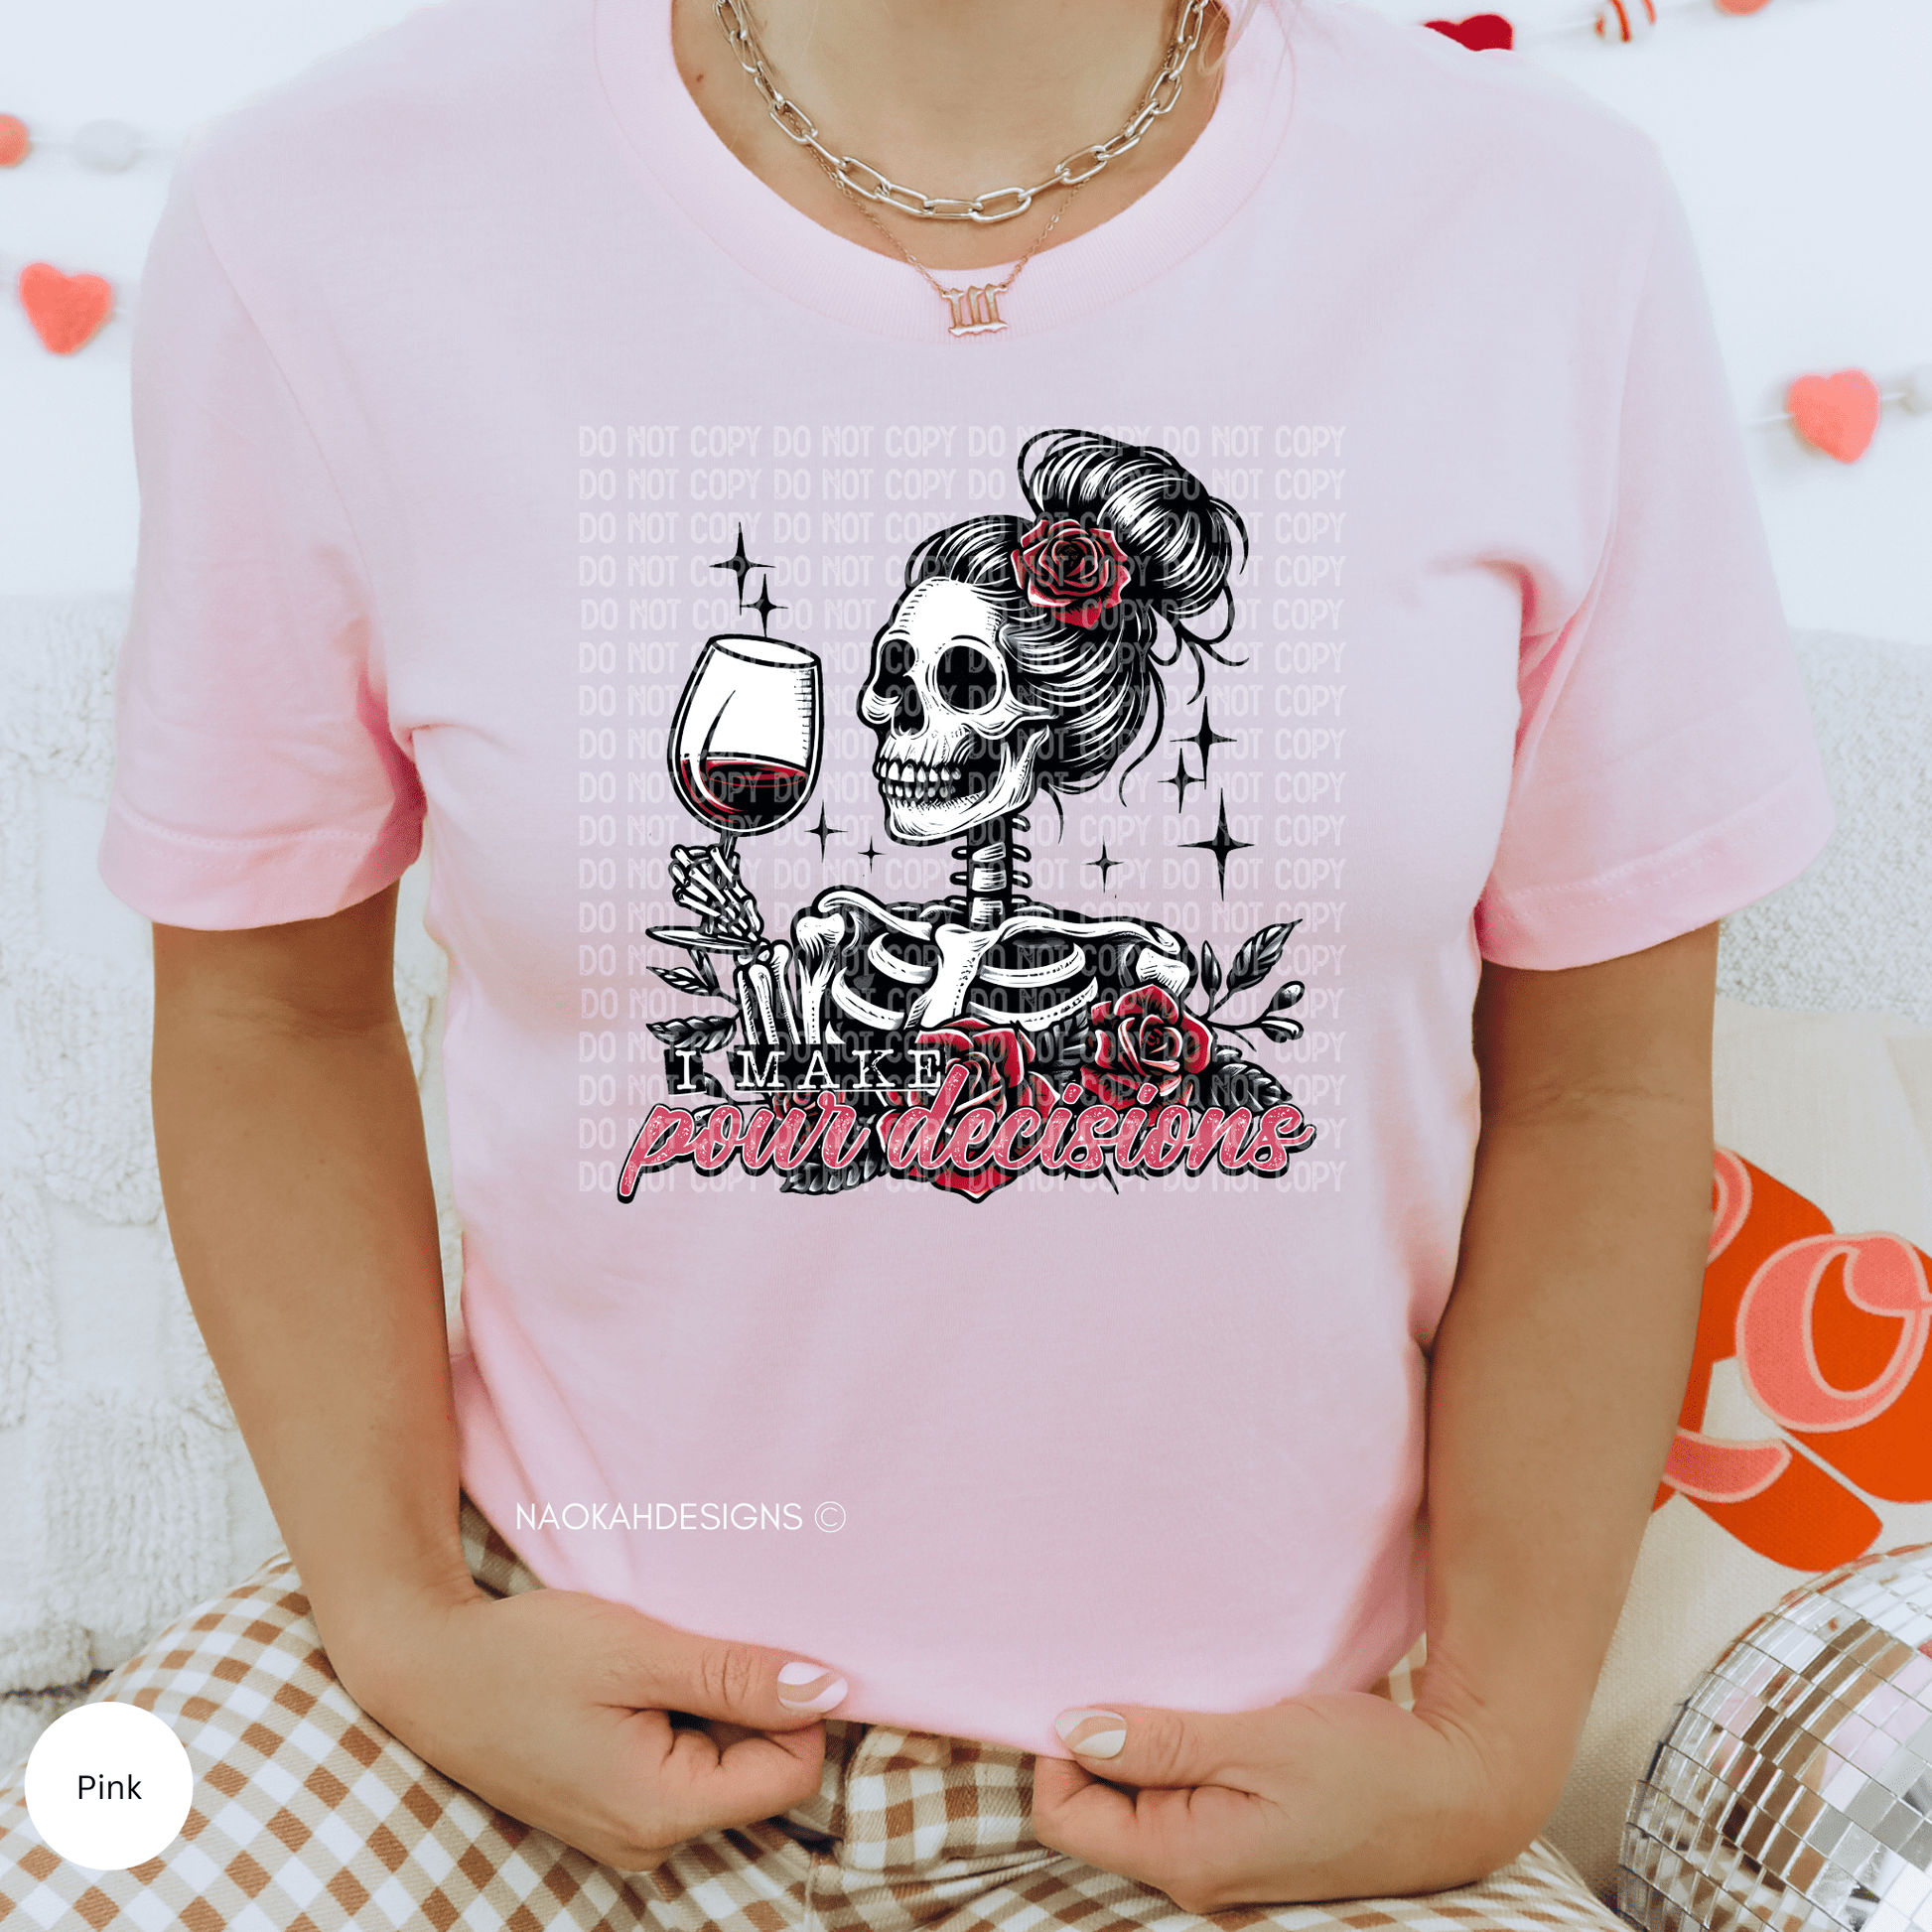 I make pour decisions skeleton shirt, bad decisions make good stories shirt, trendy wine shirt, trendy skeleton shirt